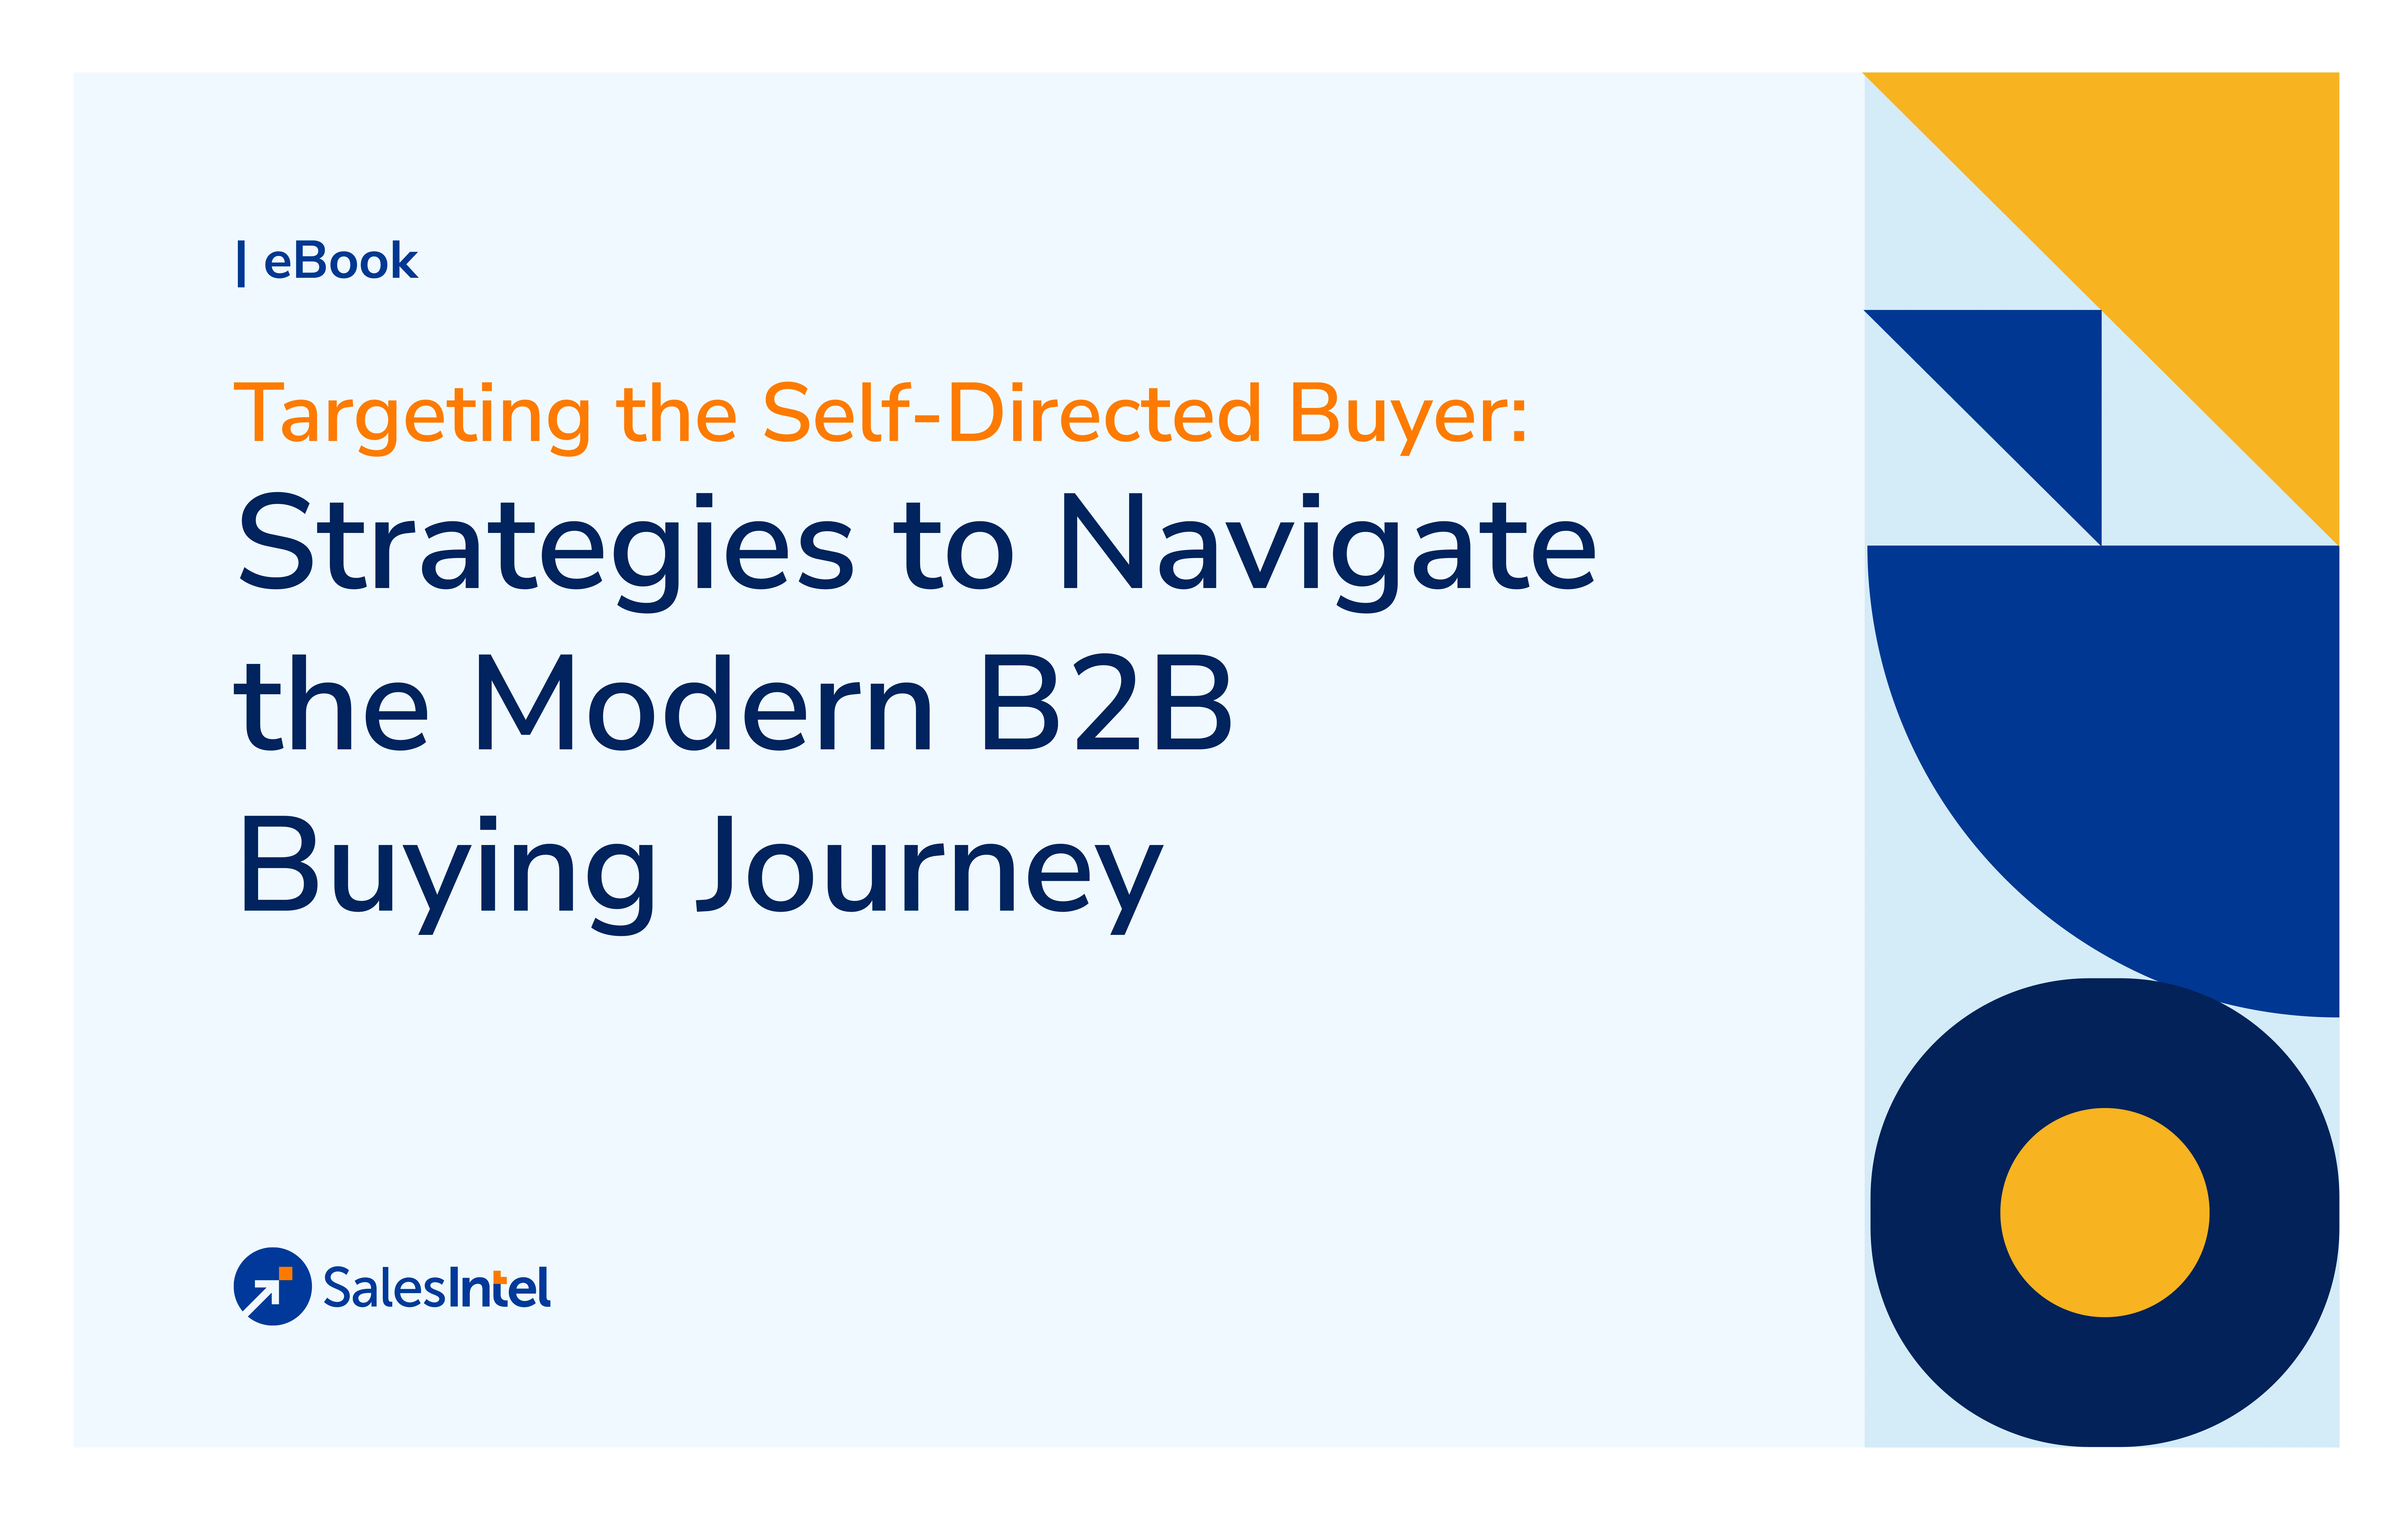 Strategies to Navigate the Modern B2B Buying Journey